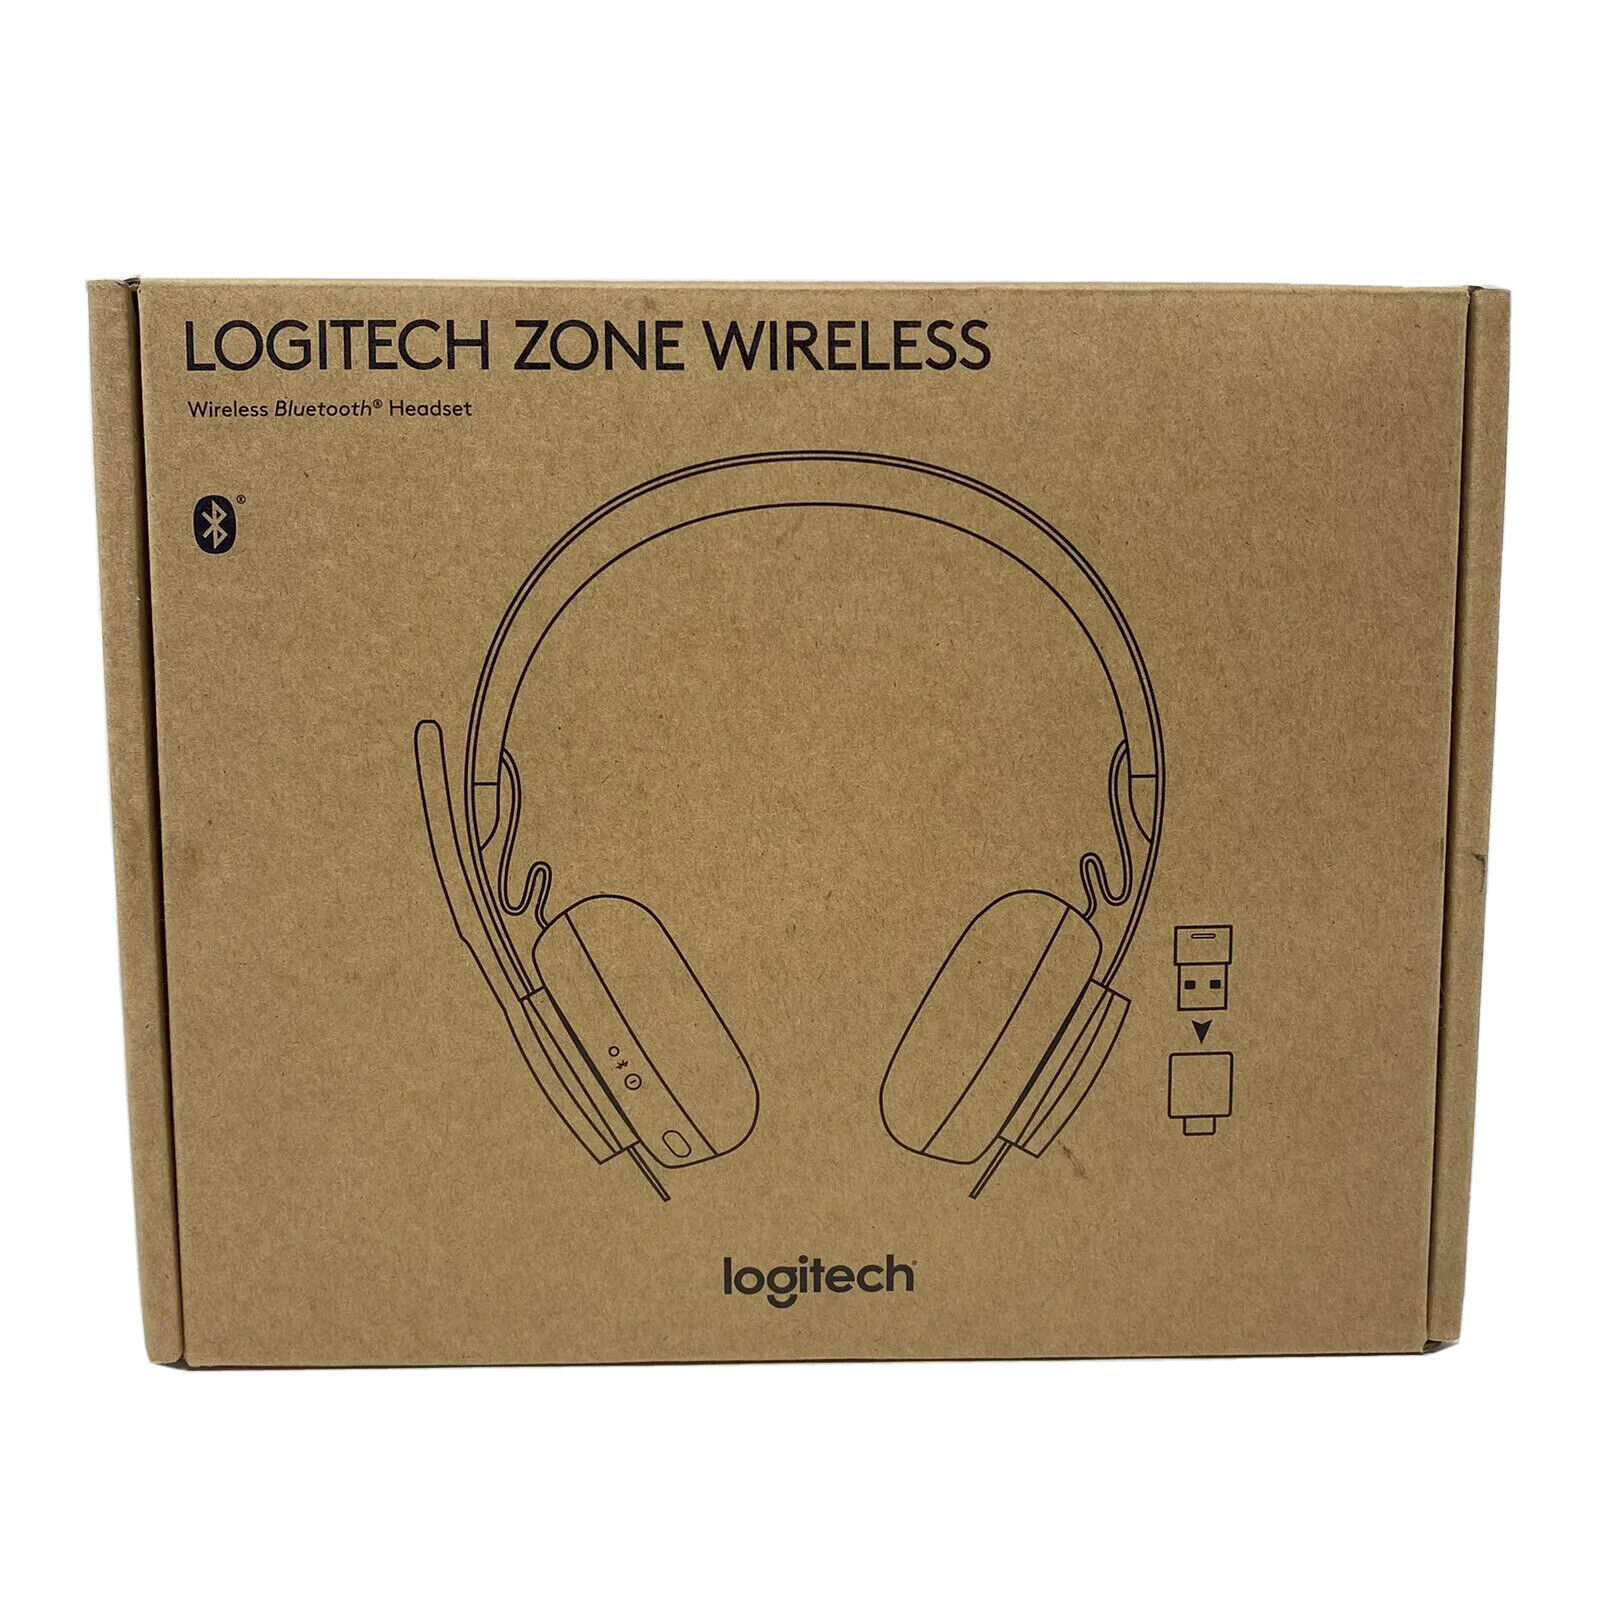 Logitech Zone Wireless UC - Black - P/N 981-000913 eBay